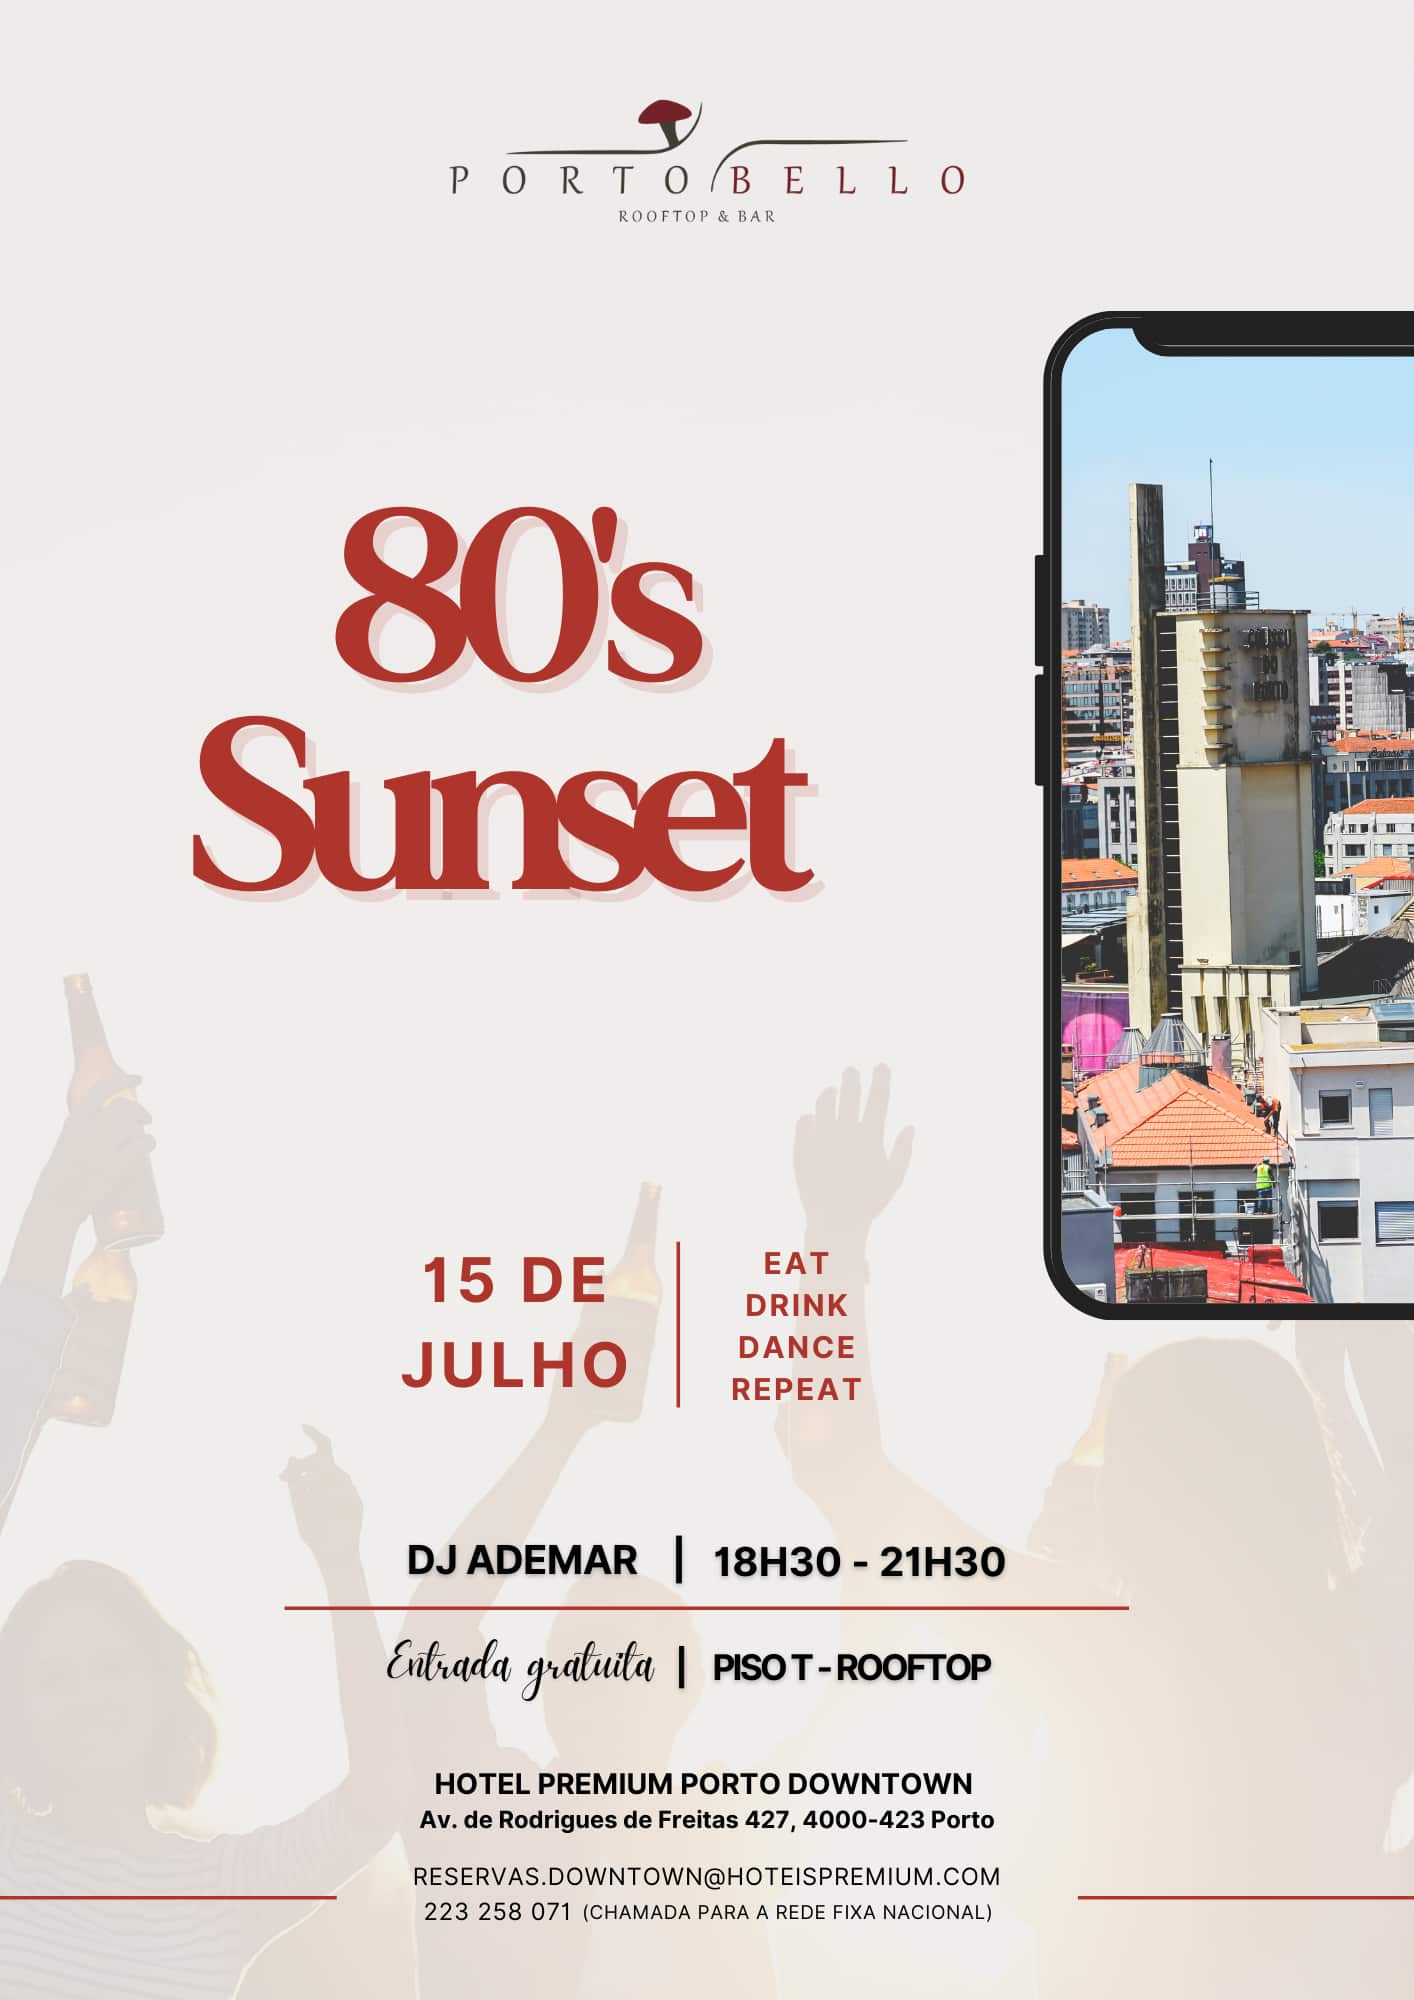 80's Sunset - Portobello Rooftop Bar